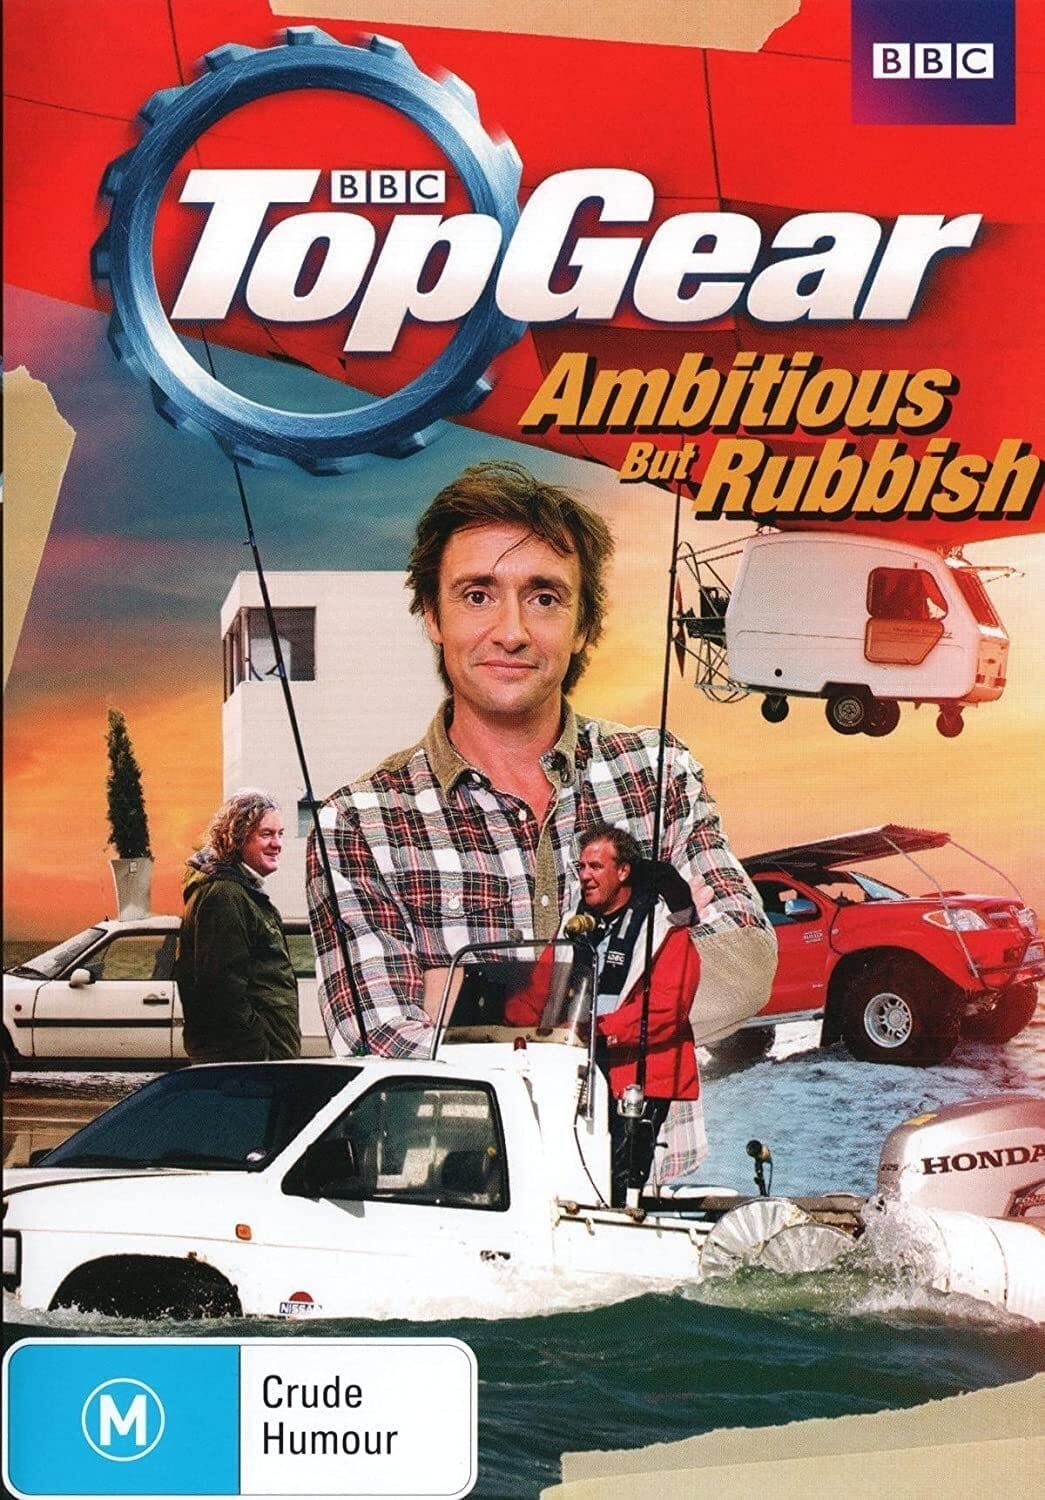 Top Gear Season 1 - watch full episodes streaming online